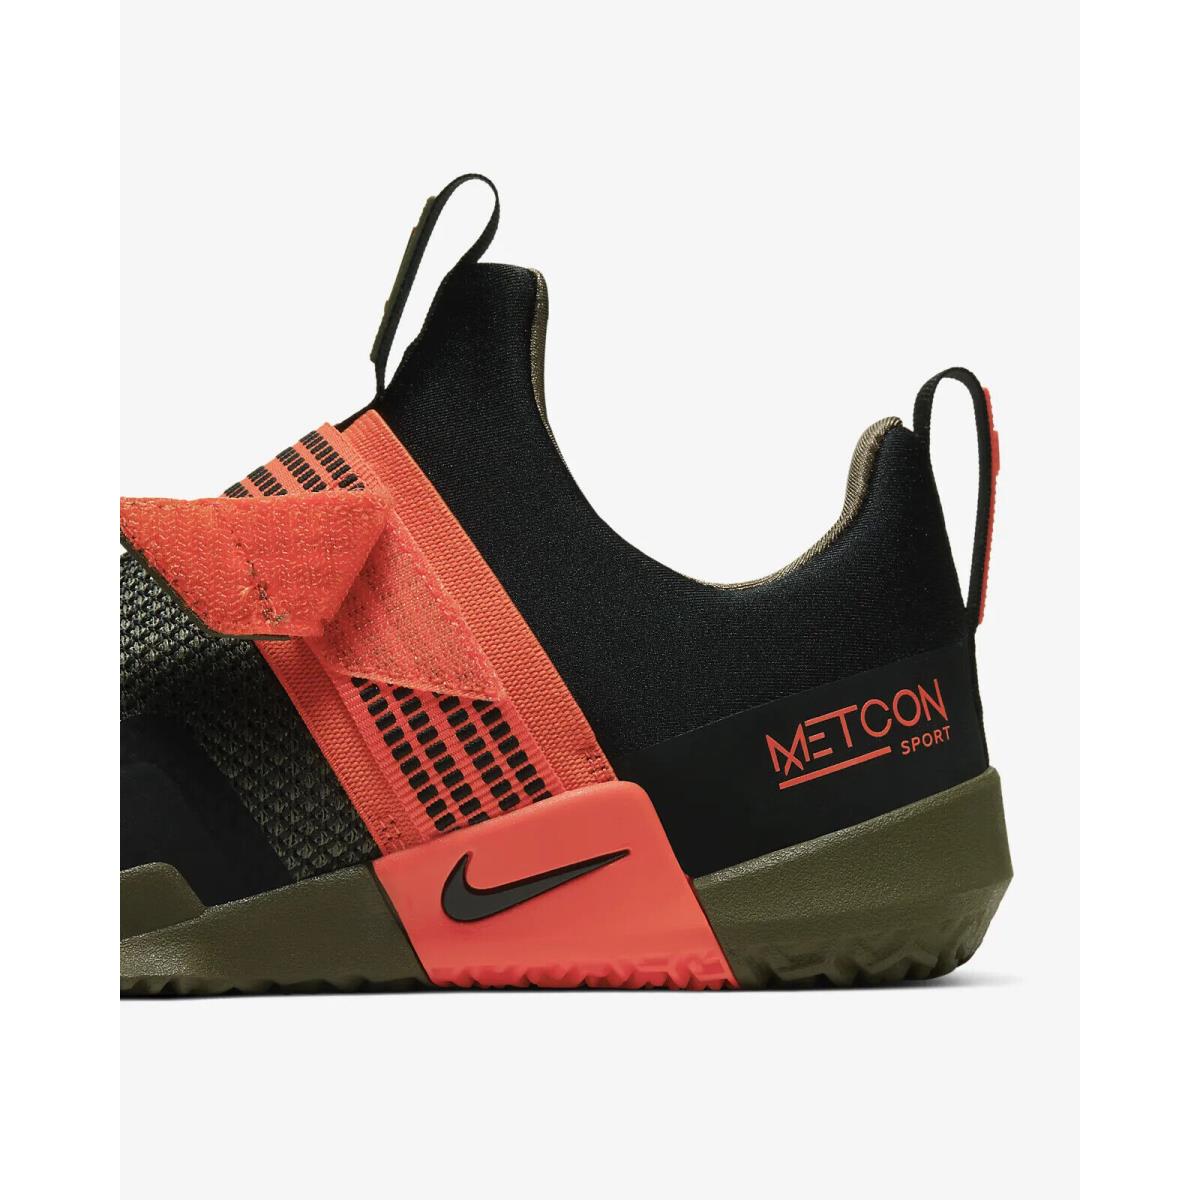 Nike shoes Metcon Sport - Medium Olive/Black 3